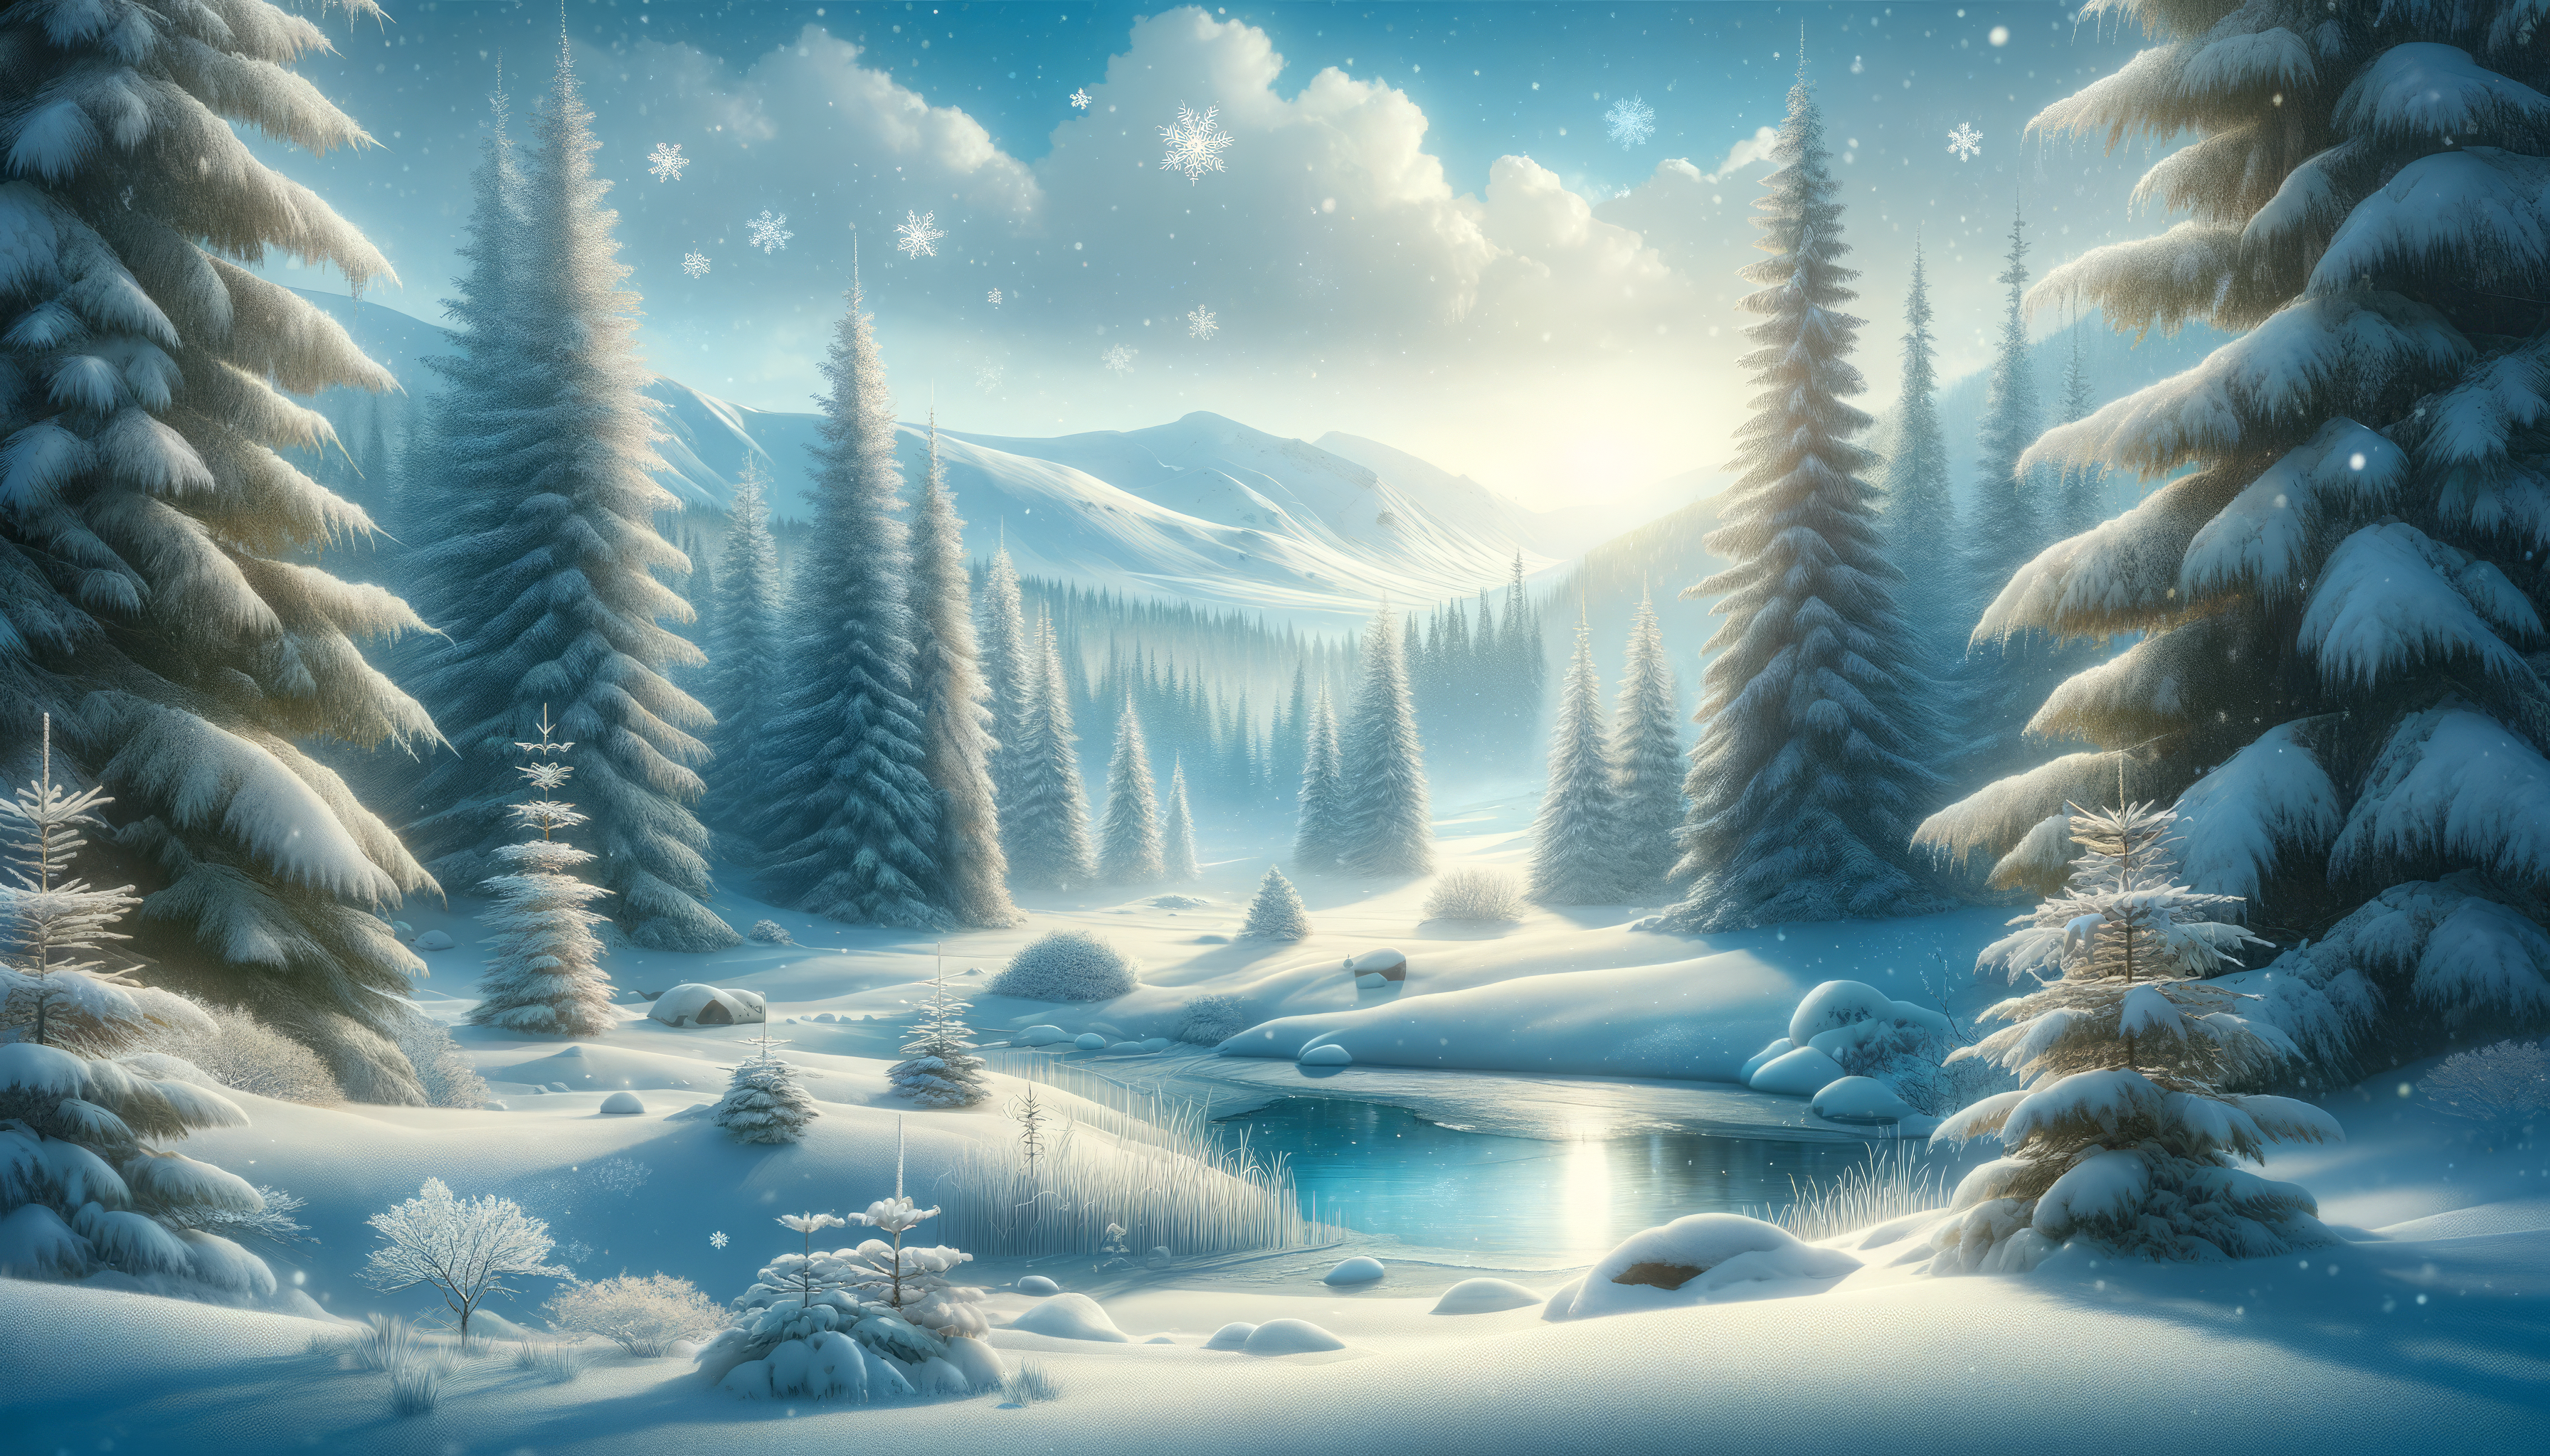 Enchanting Winter Wonderland HD Wallpaper By Robokoboto